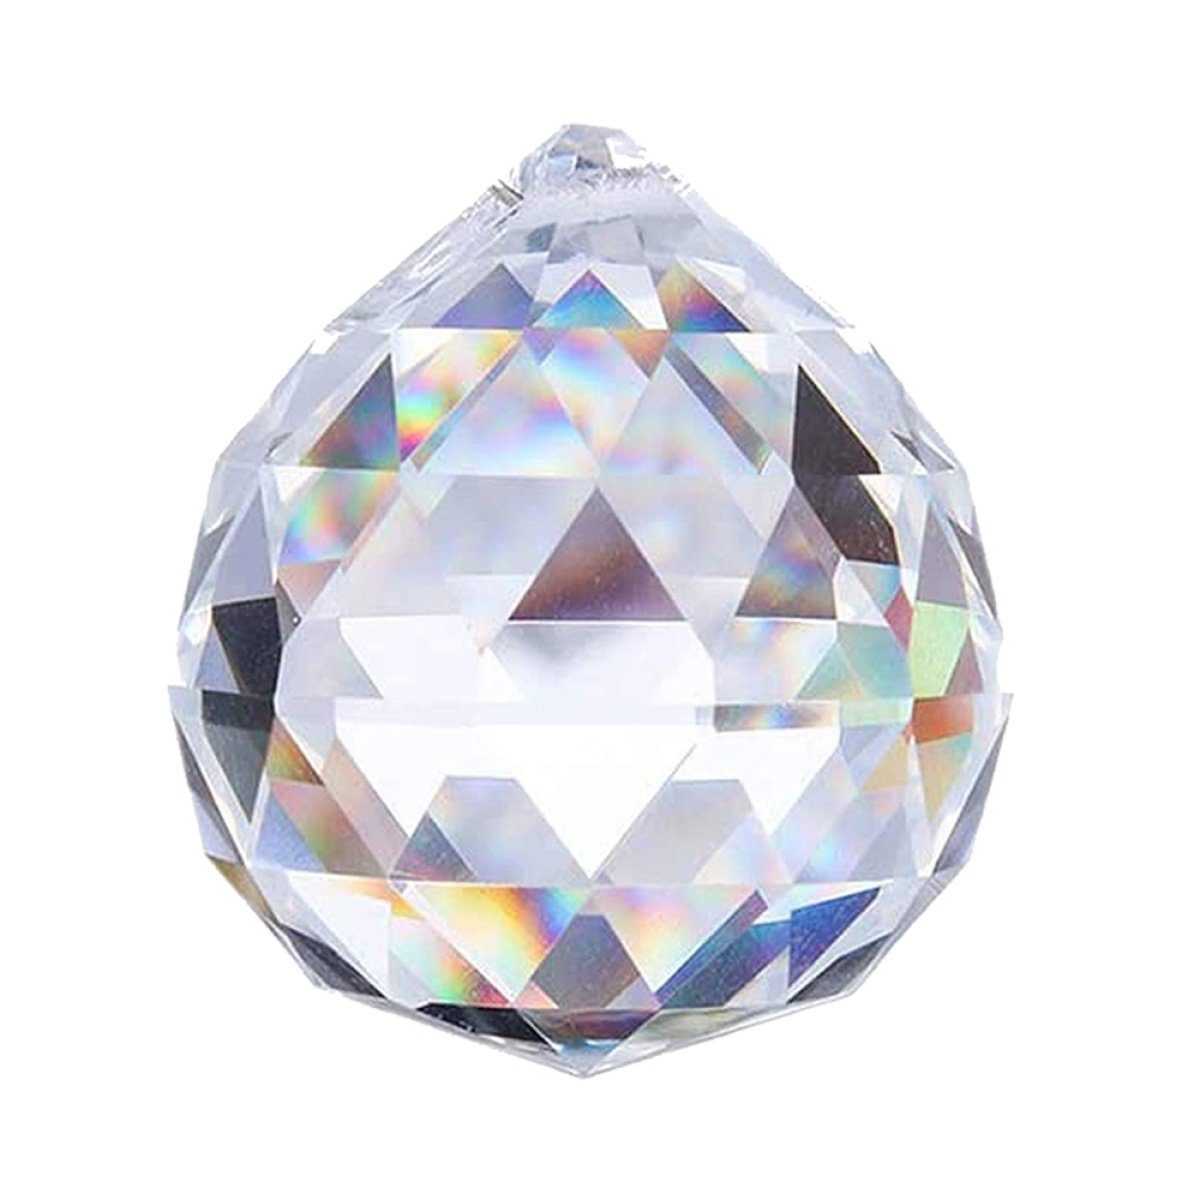 Kristall Questive Prisma Kugel Lampe Hängedekoration Klarglas Feng-Shui hängend